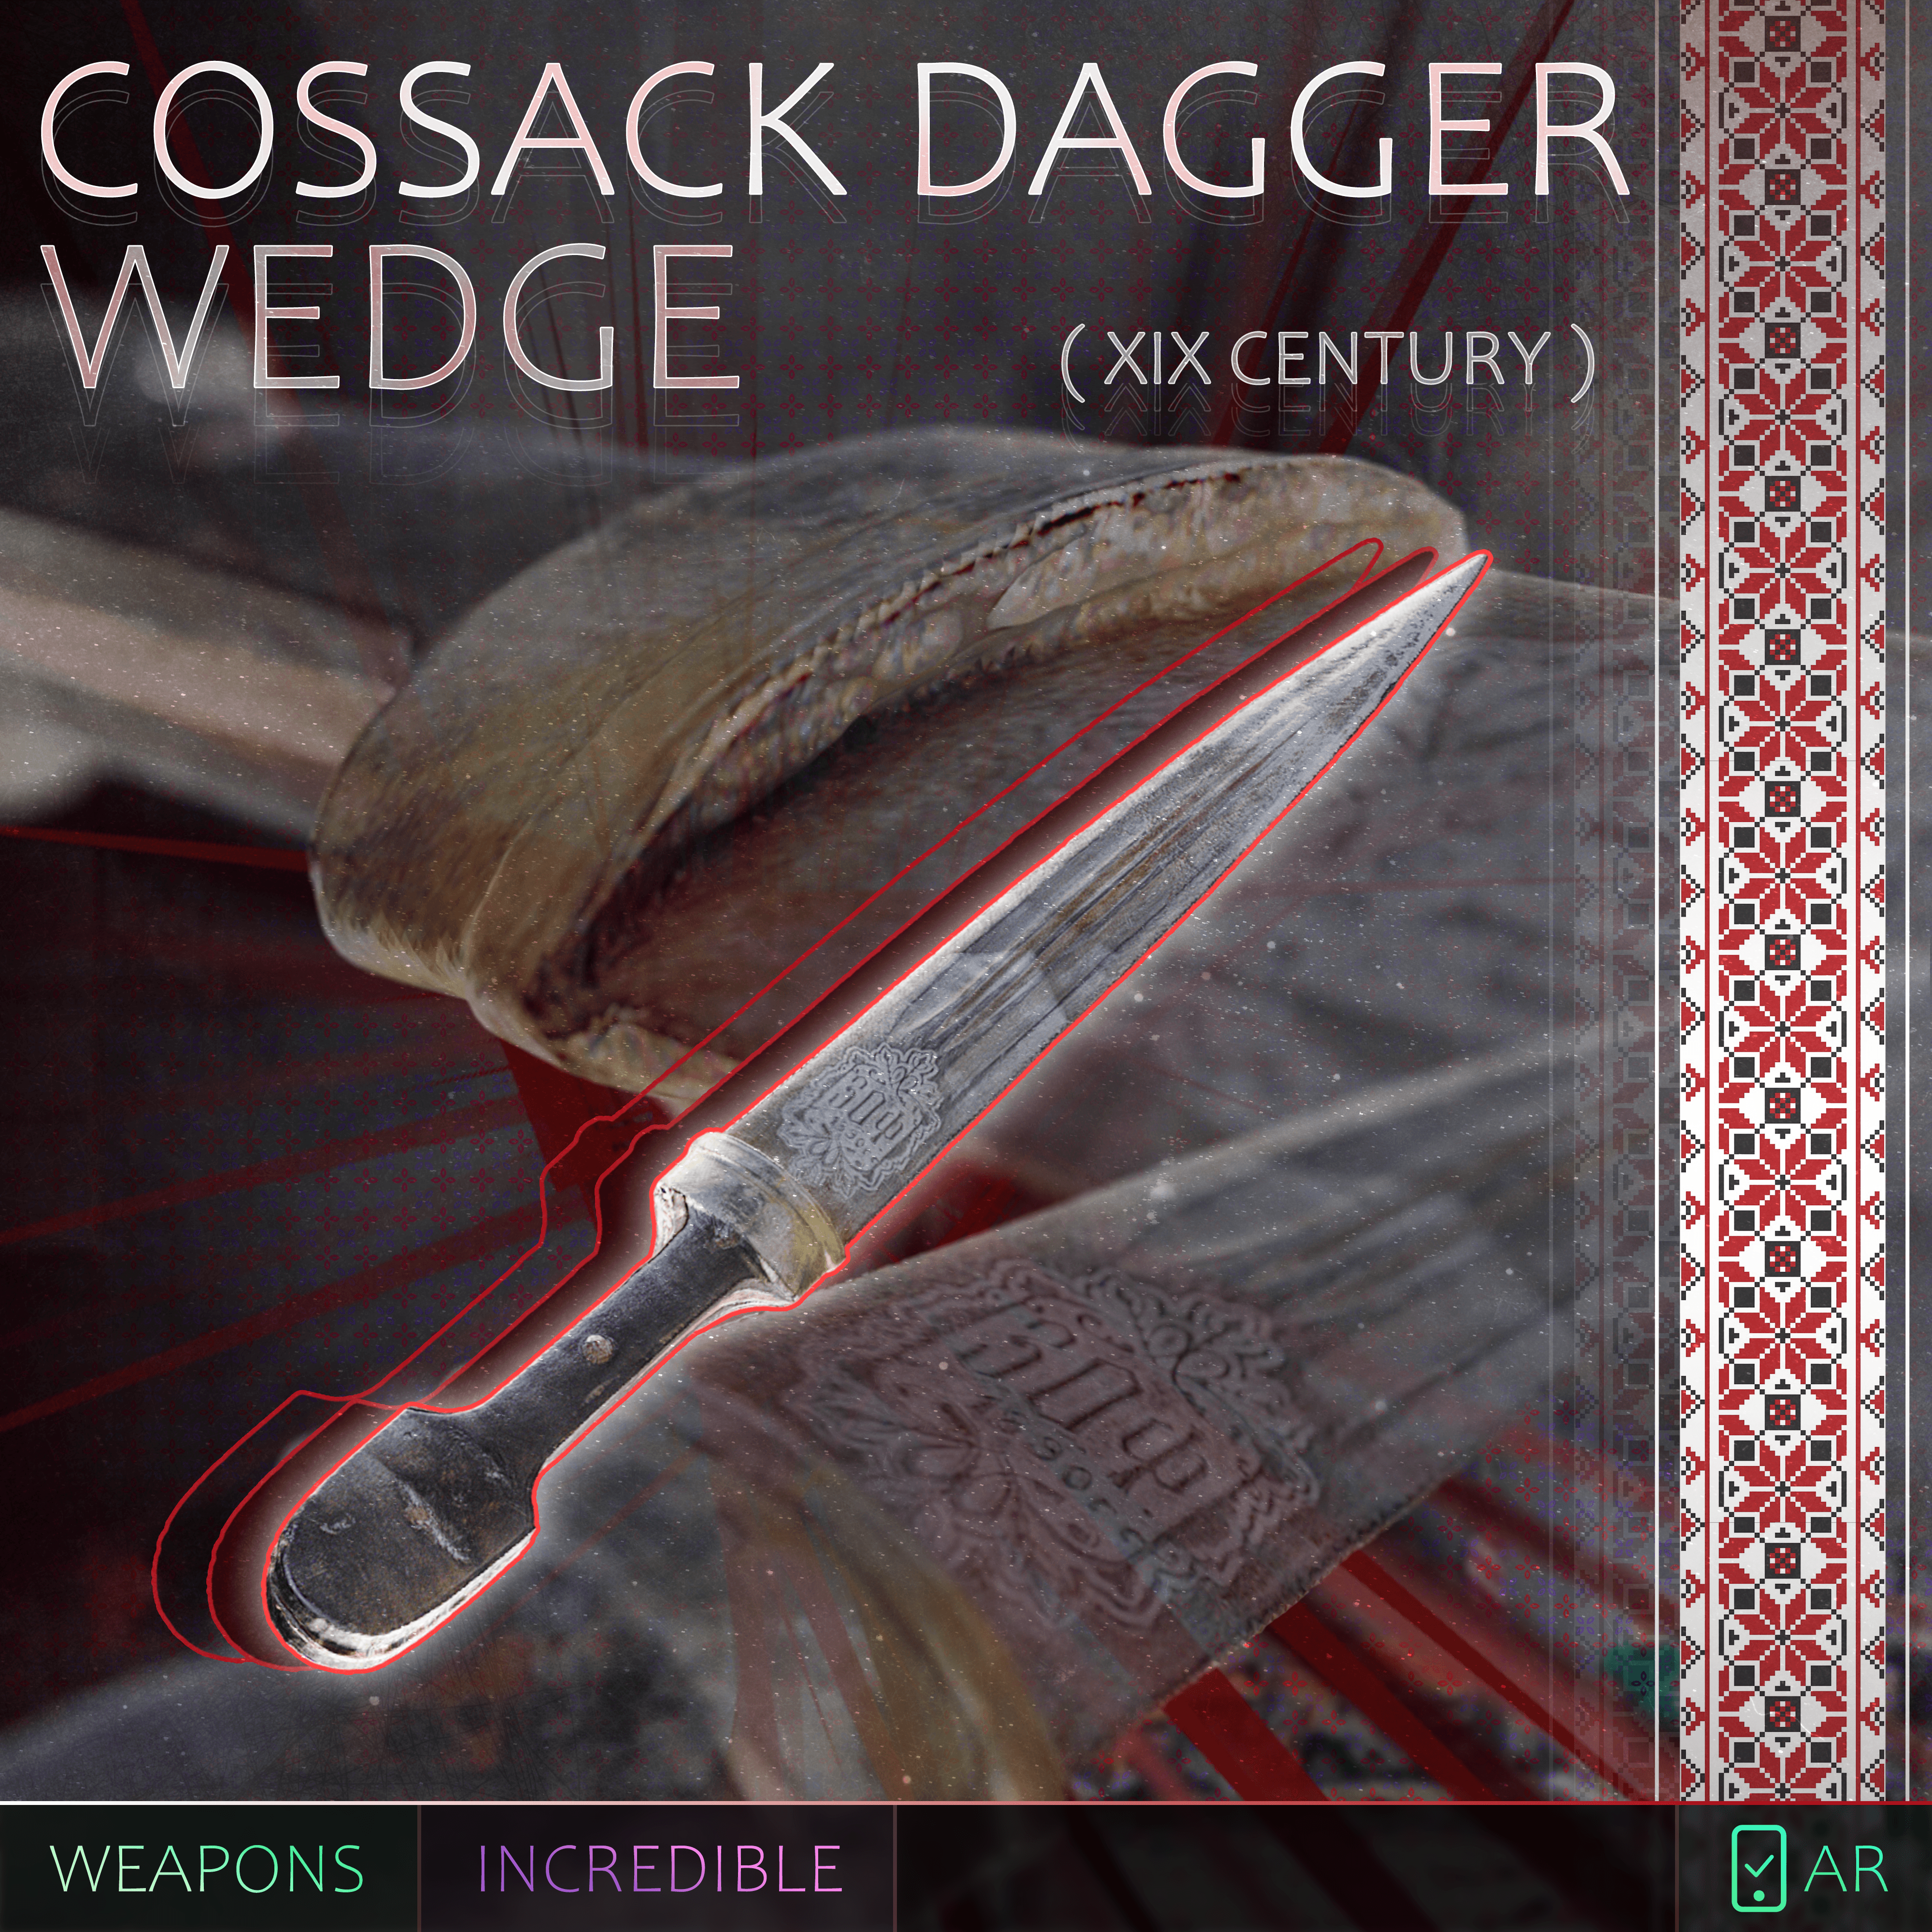 Cossack Dagger Wedge